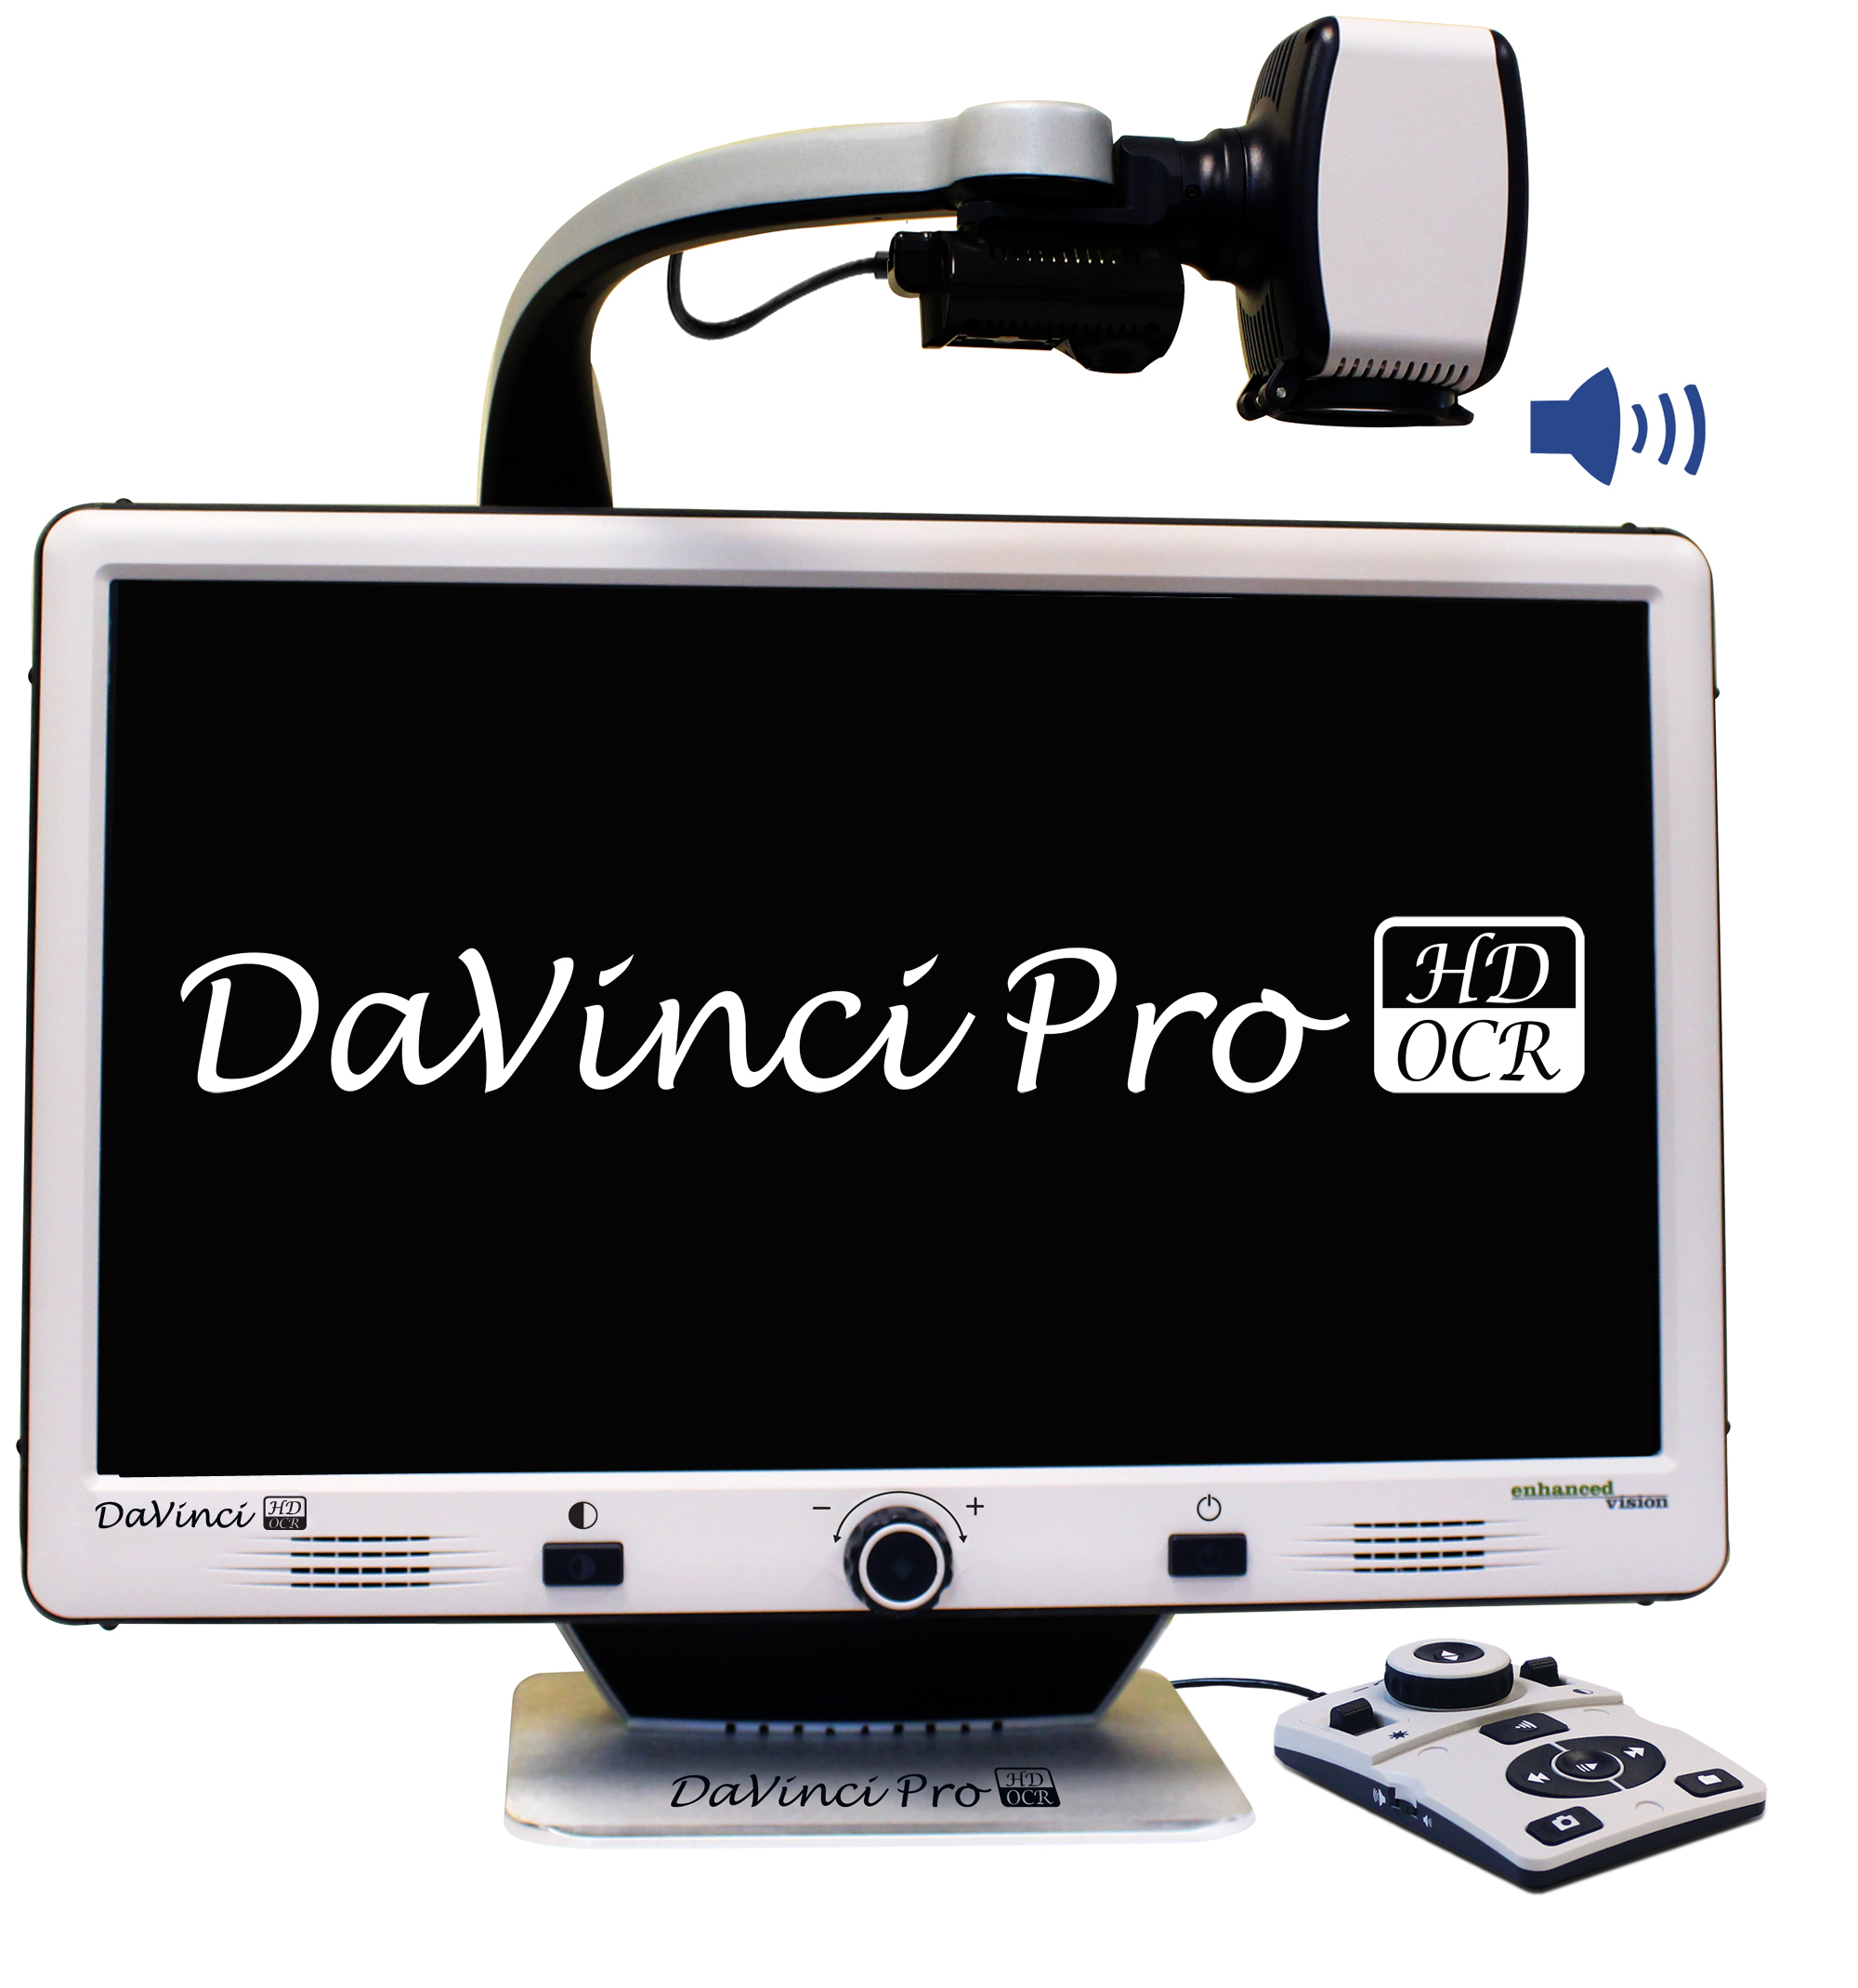 DaVinci Pro with logo on screen